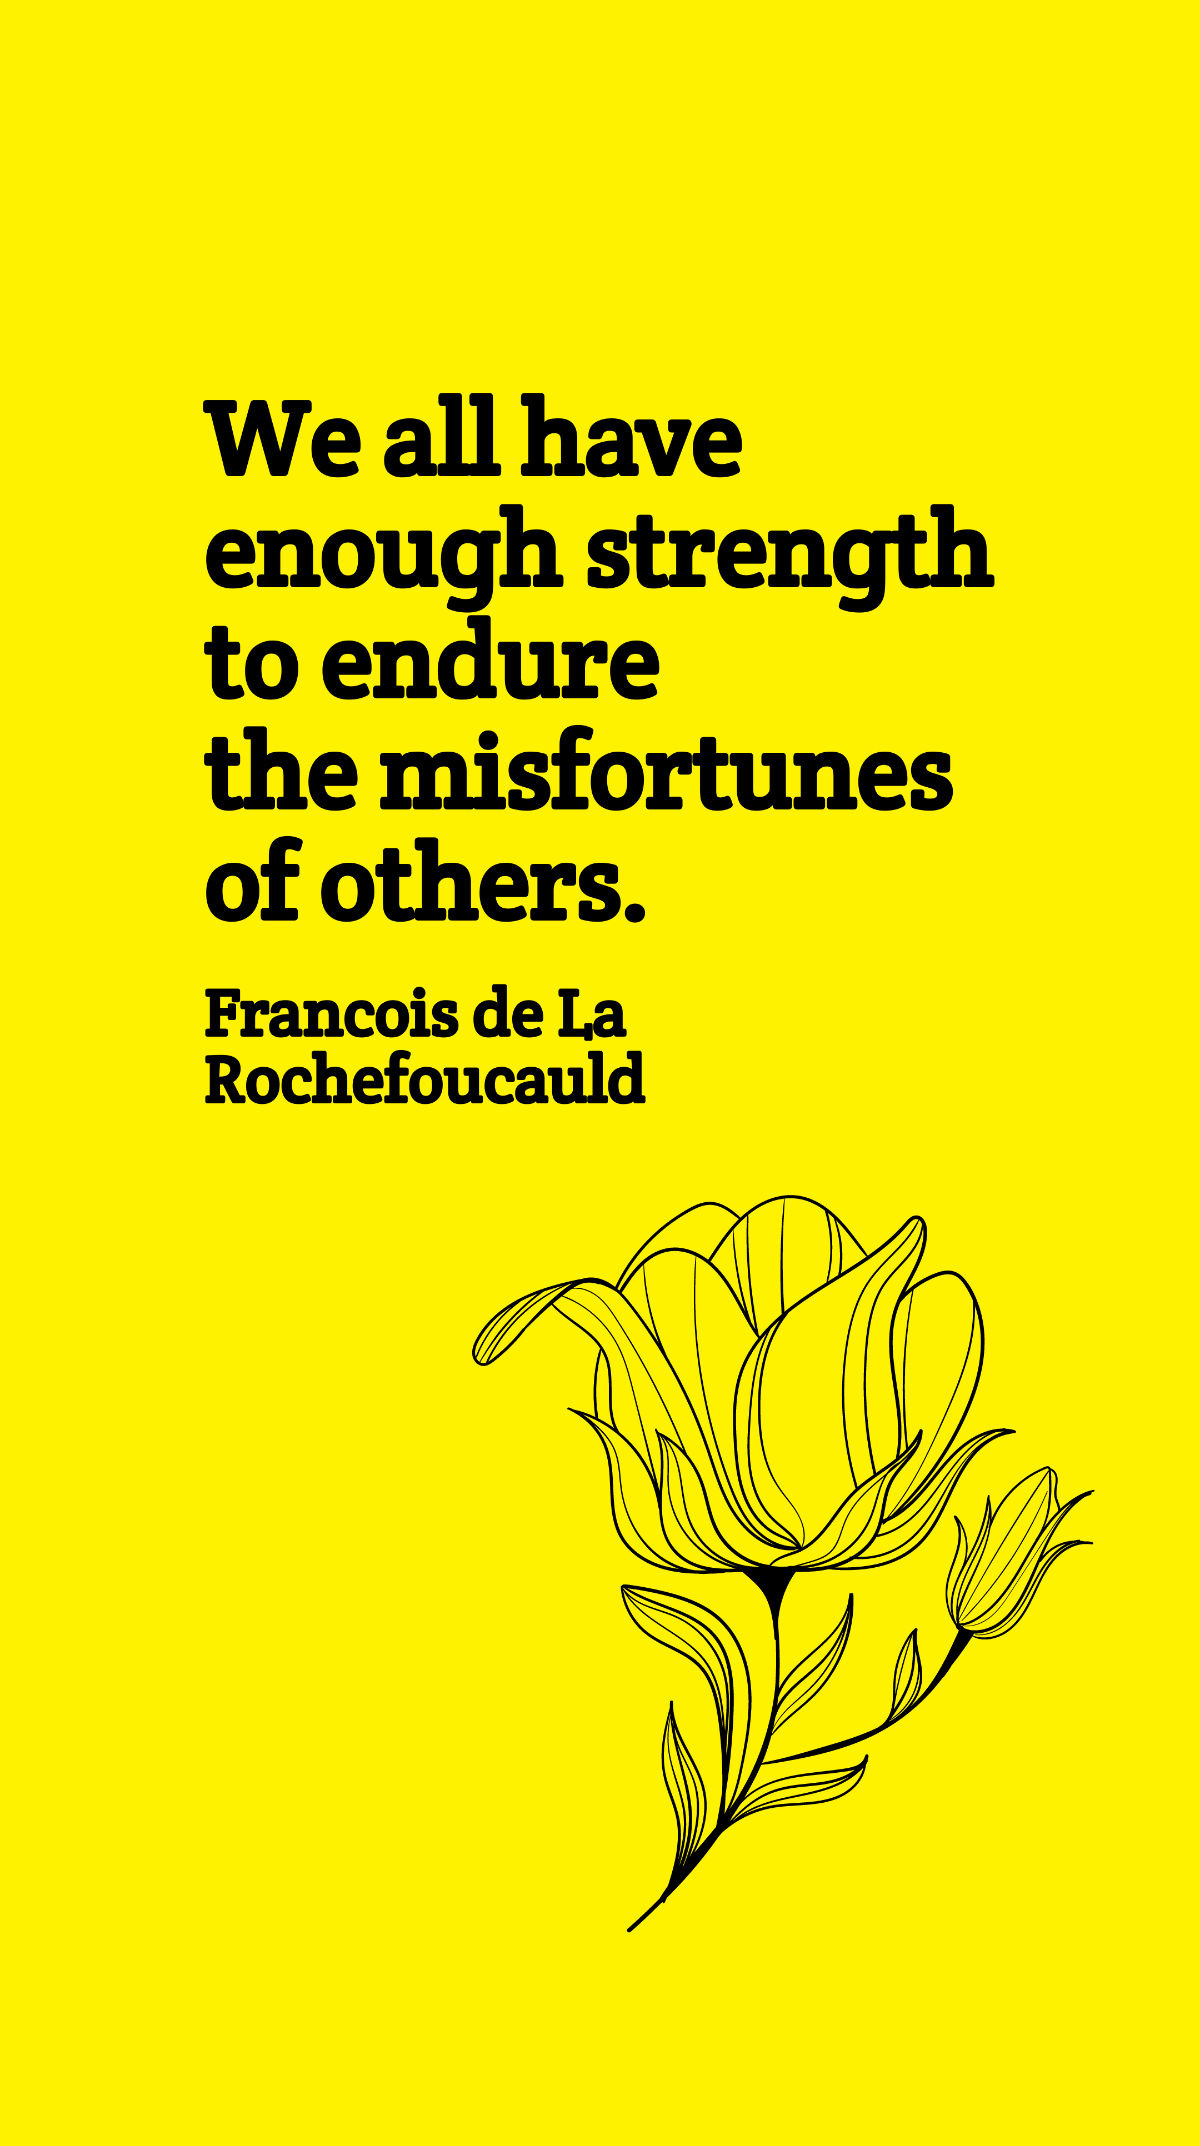 Francois de La Rochefoucauld - We all have enough strength to endure the misfortunes of others. Template